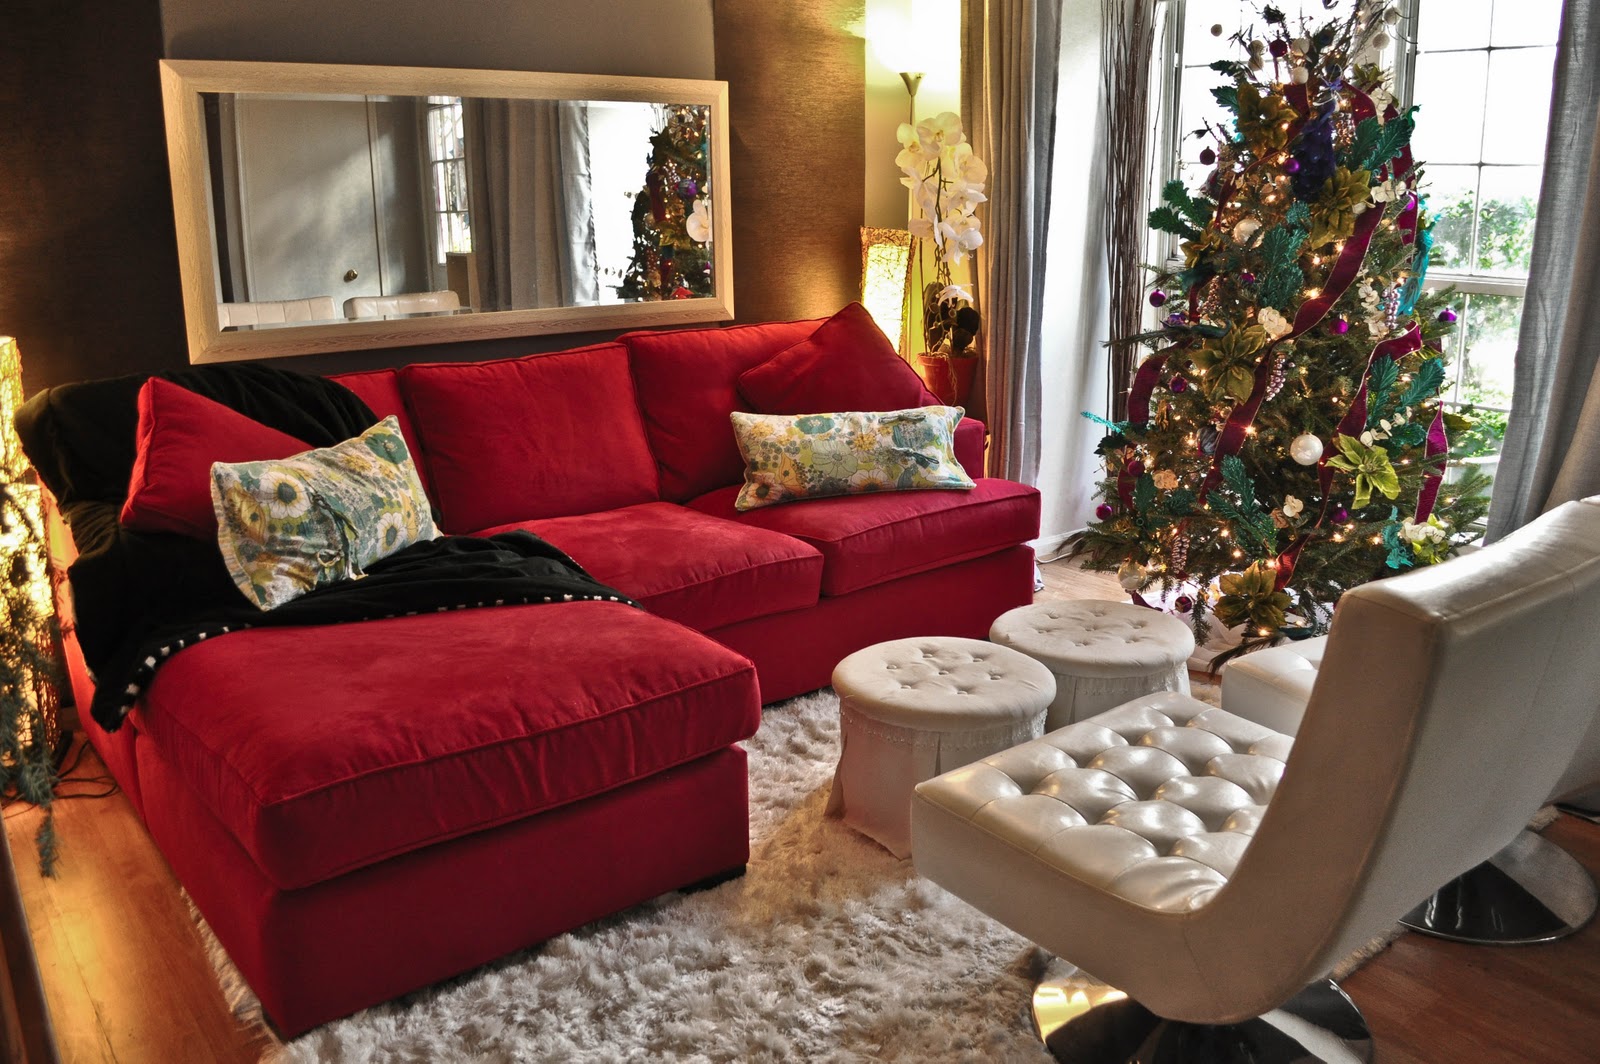 Cosy Christmas Rooms Cozy Christmas Living Room The perfect christmas